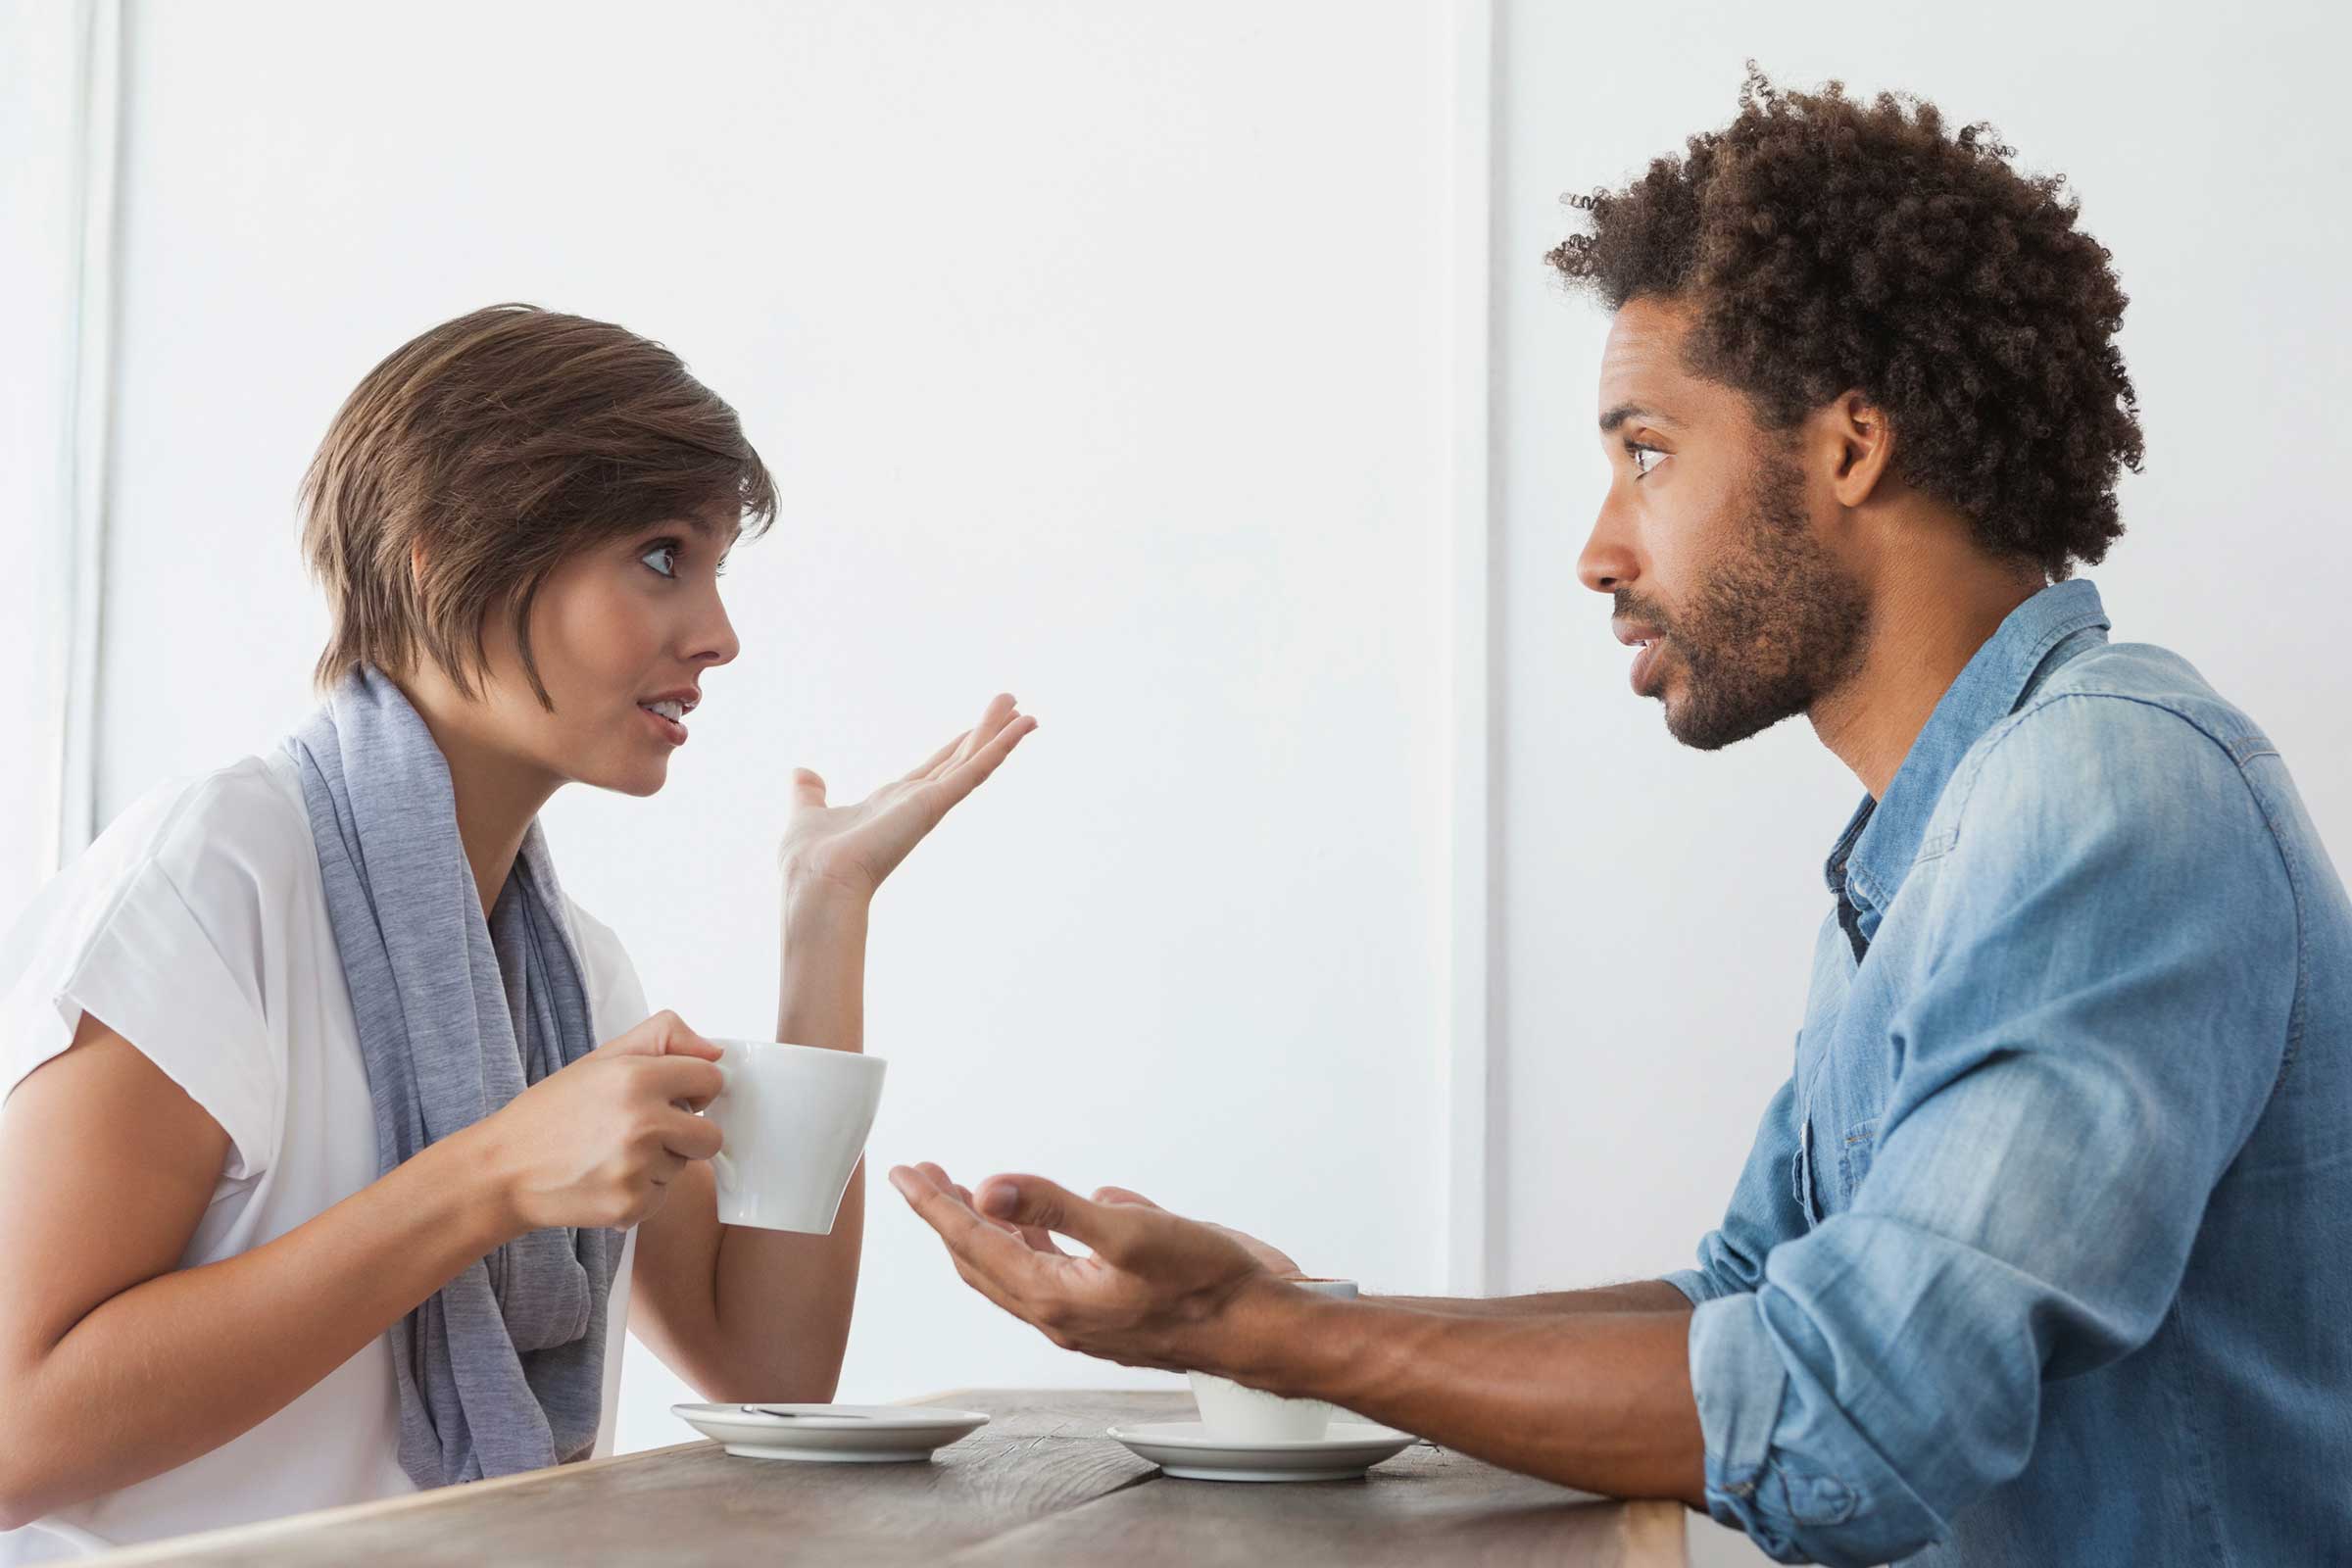 Conversation Starters That Make You More Interesting | Reader's Digest